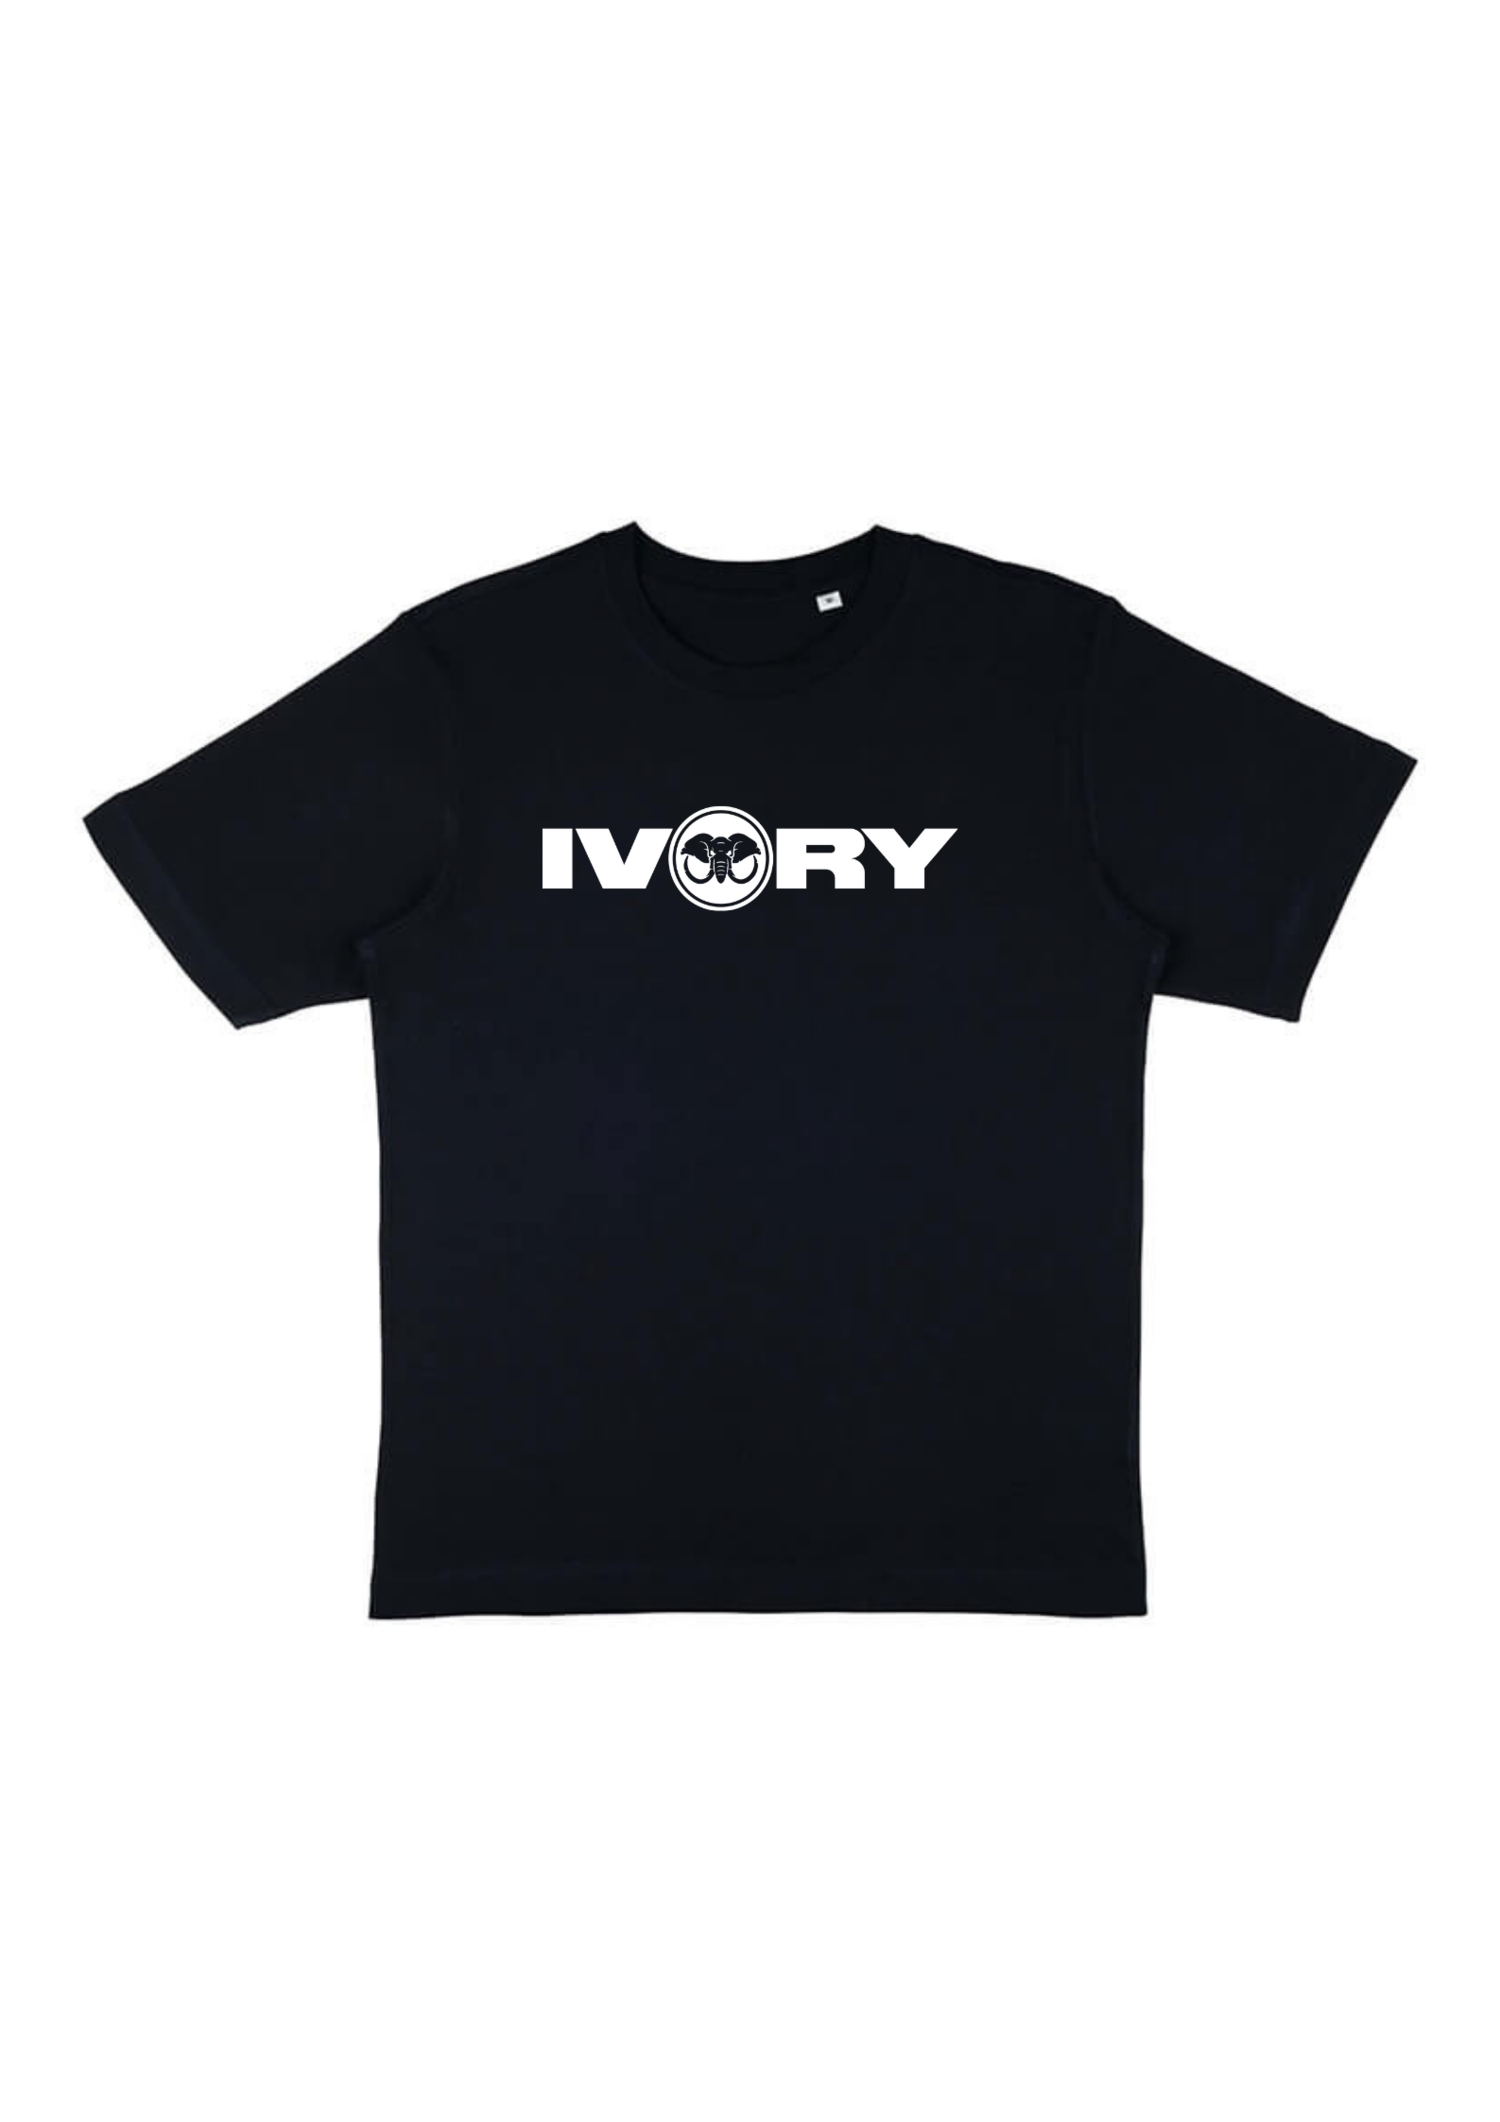 Ivo gang t-shirt